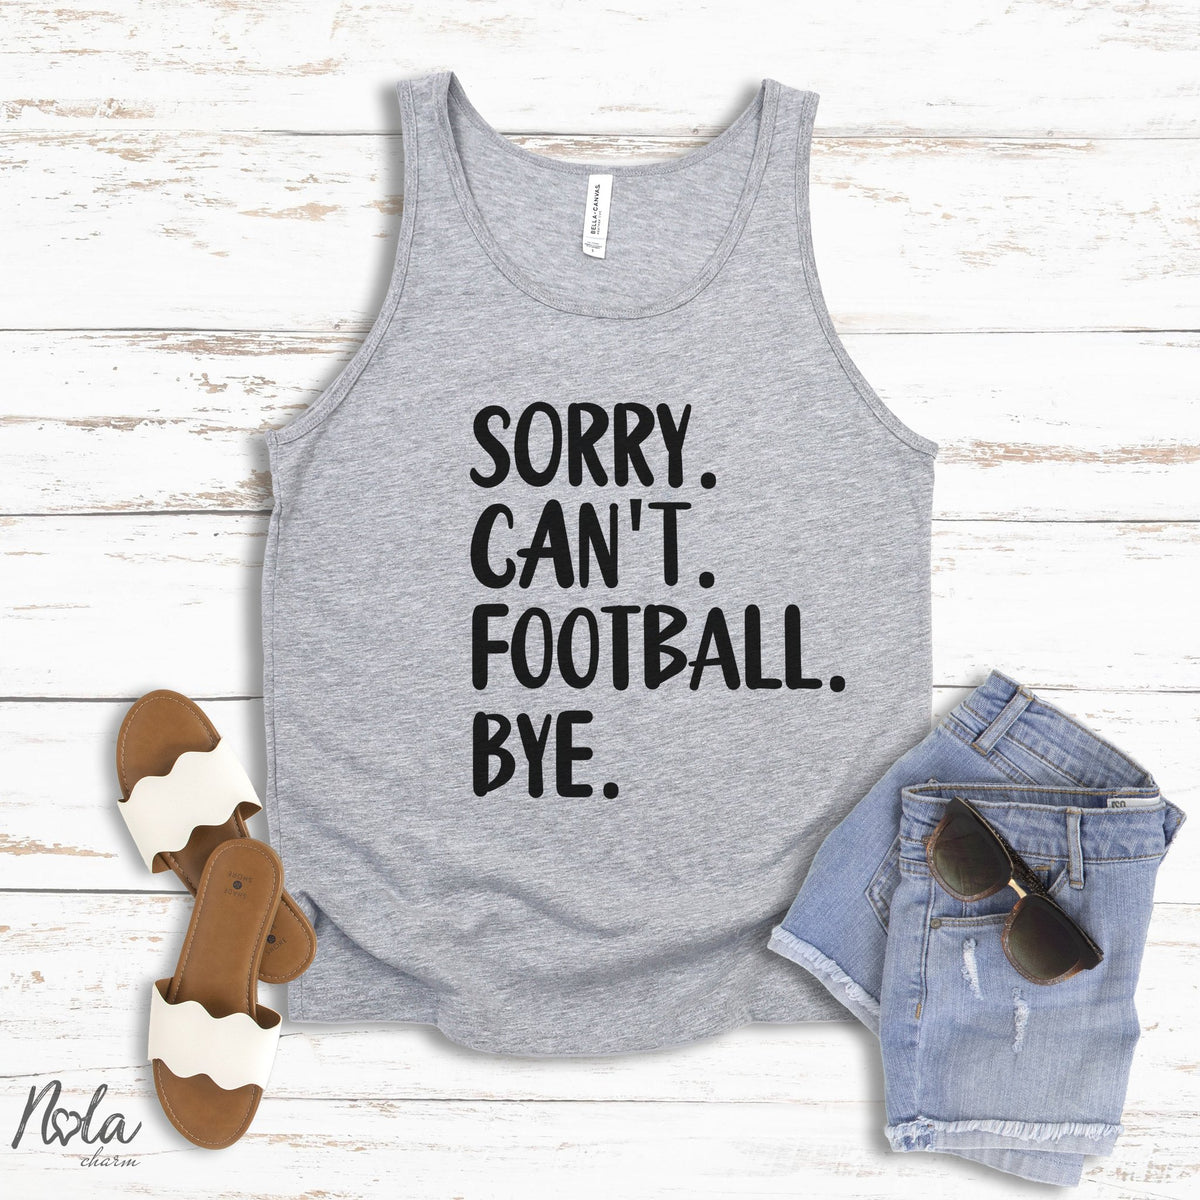 Sorry. Can't. Football. Bye. - Nola Charm